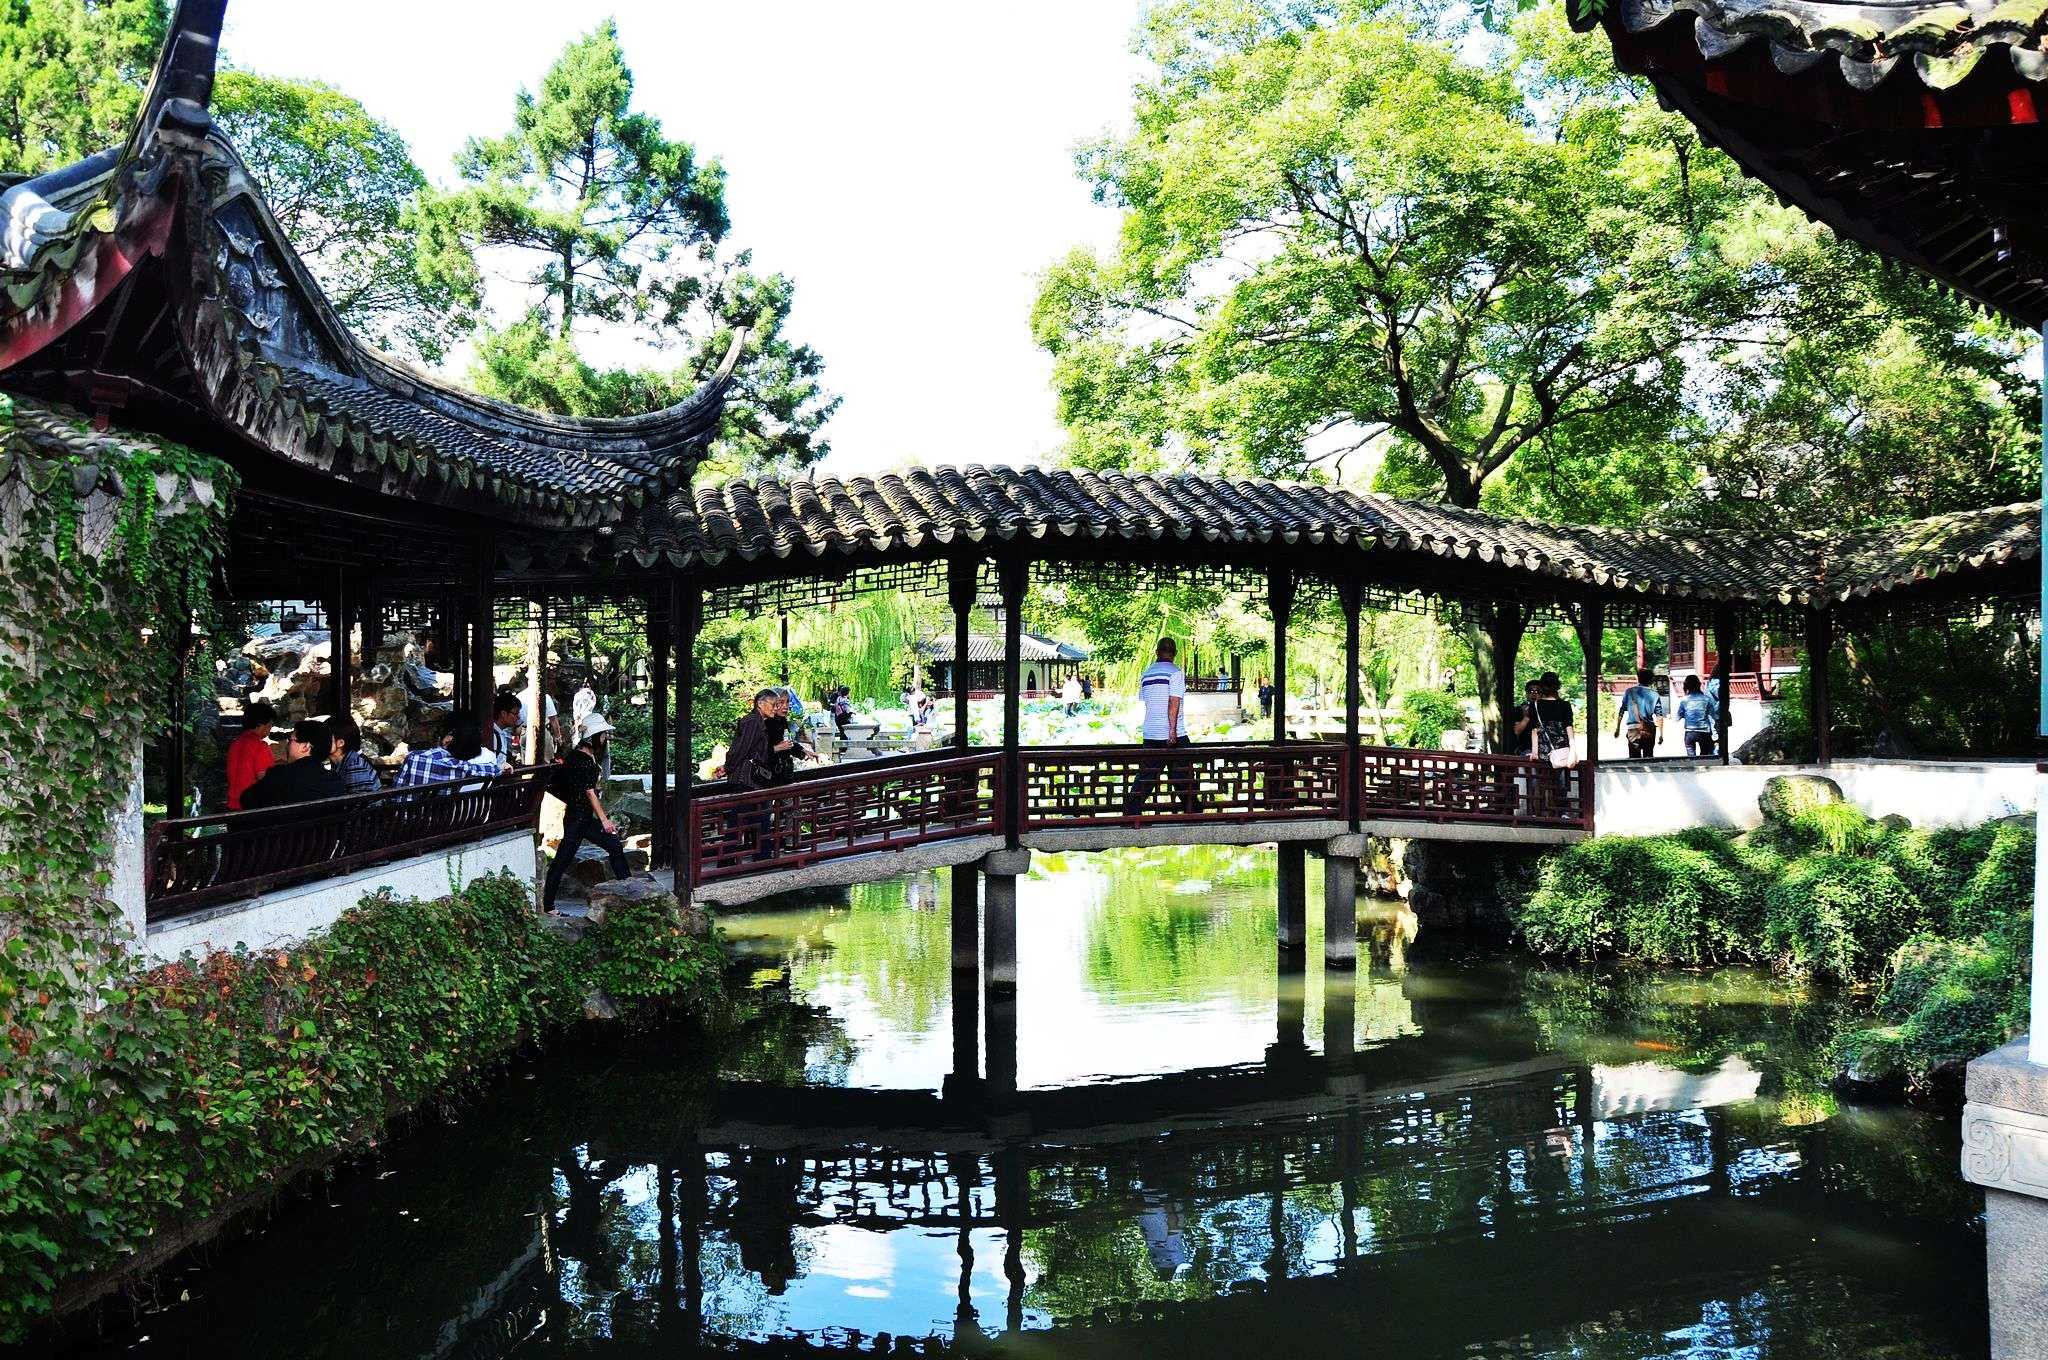 The-Gardens-of-Suzhou-2